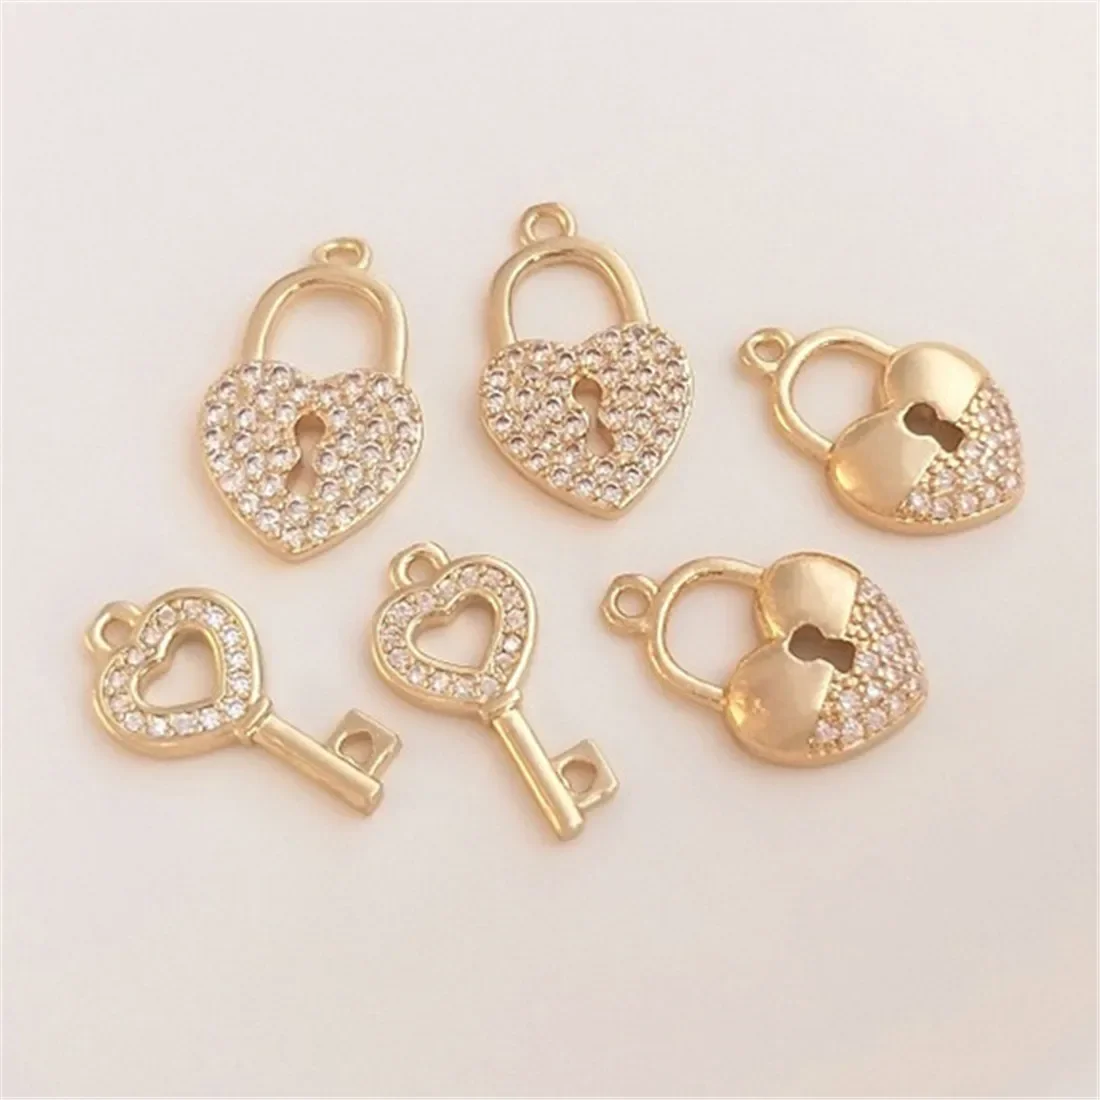 

14K Gold Inlaid Zirconia Heart Lock Key Pendant Love Lock Charm Handmade DIY Bracelet Jewelry Accessories D015